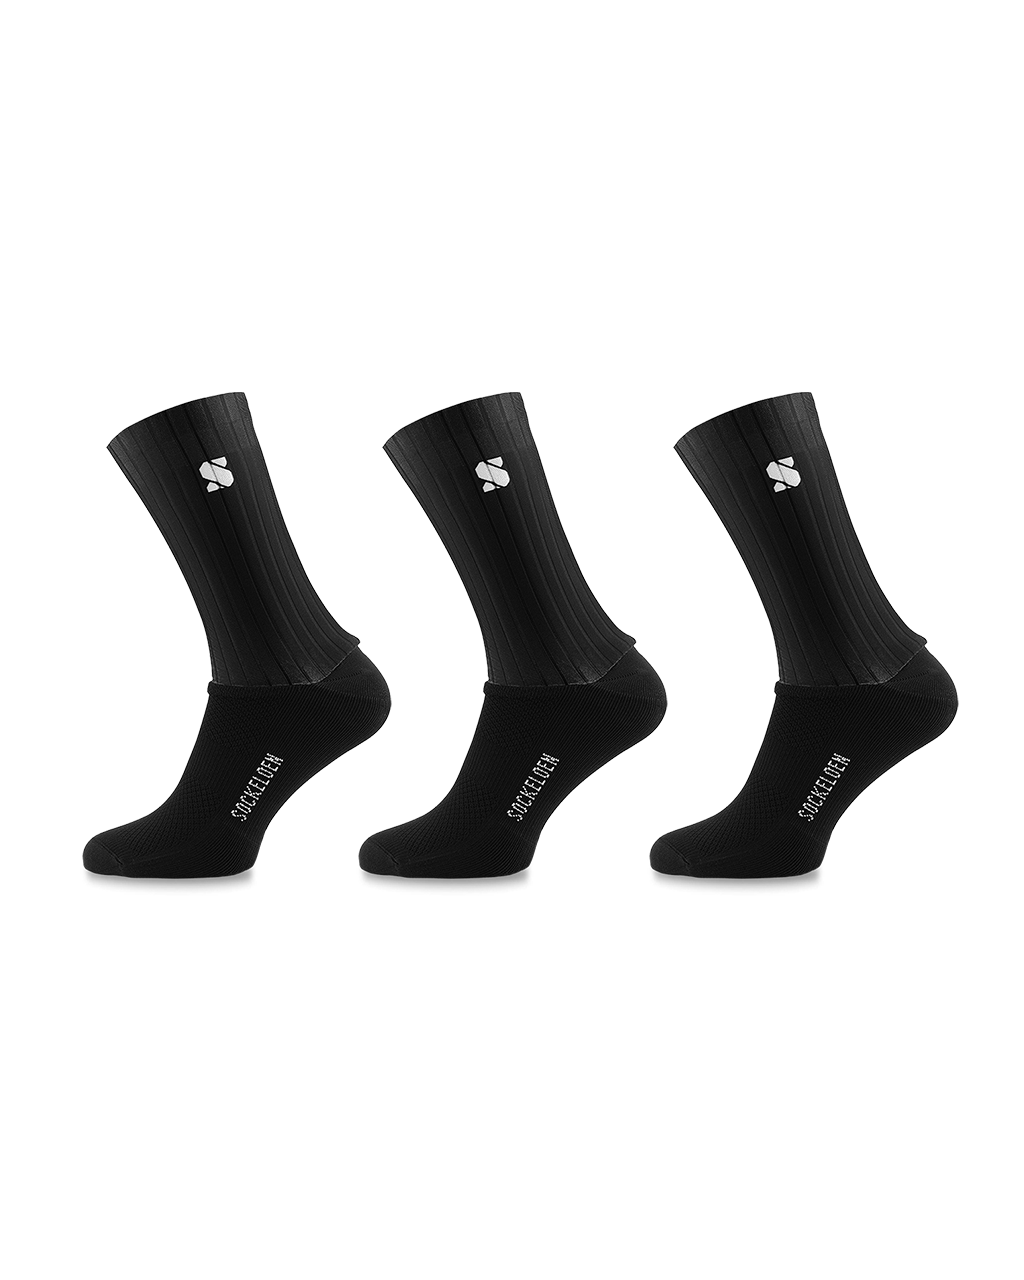 black-sockeloen-aero-cycling-socks-3-pack